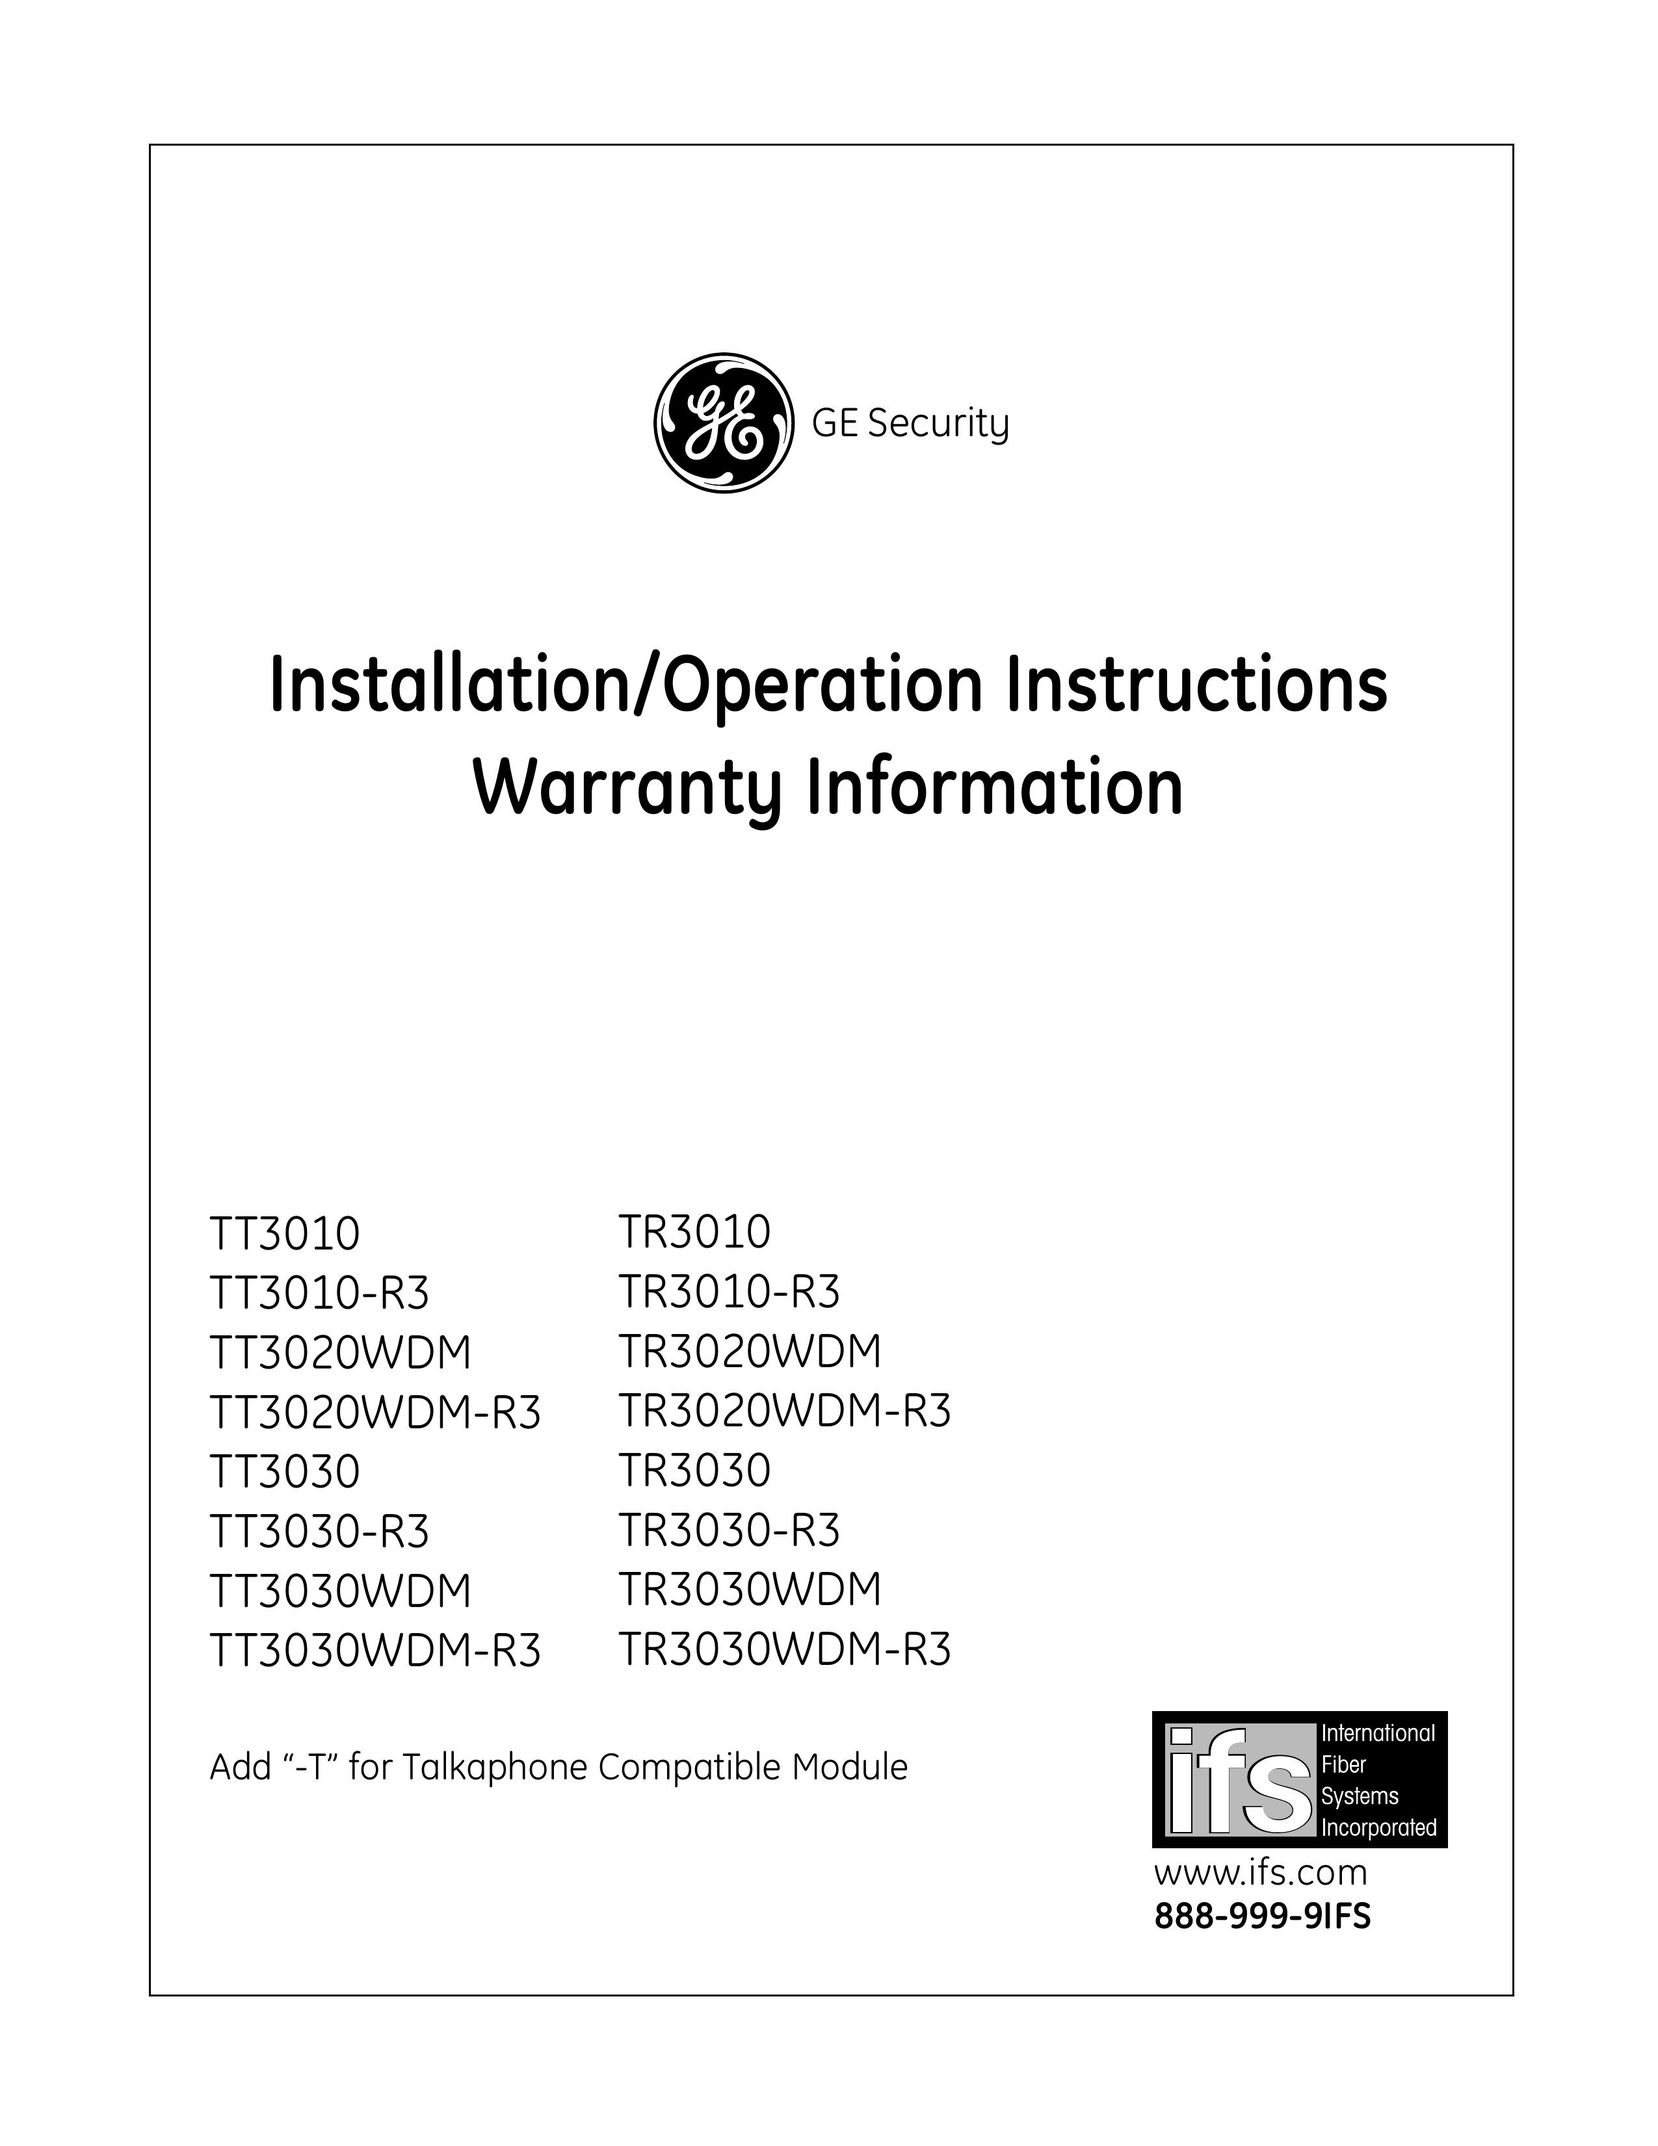 GE TT3020WDM-R3 Telephone Accessories User Manual